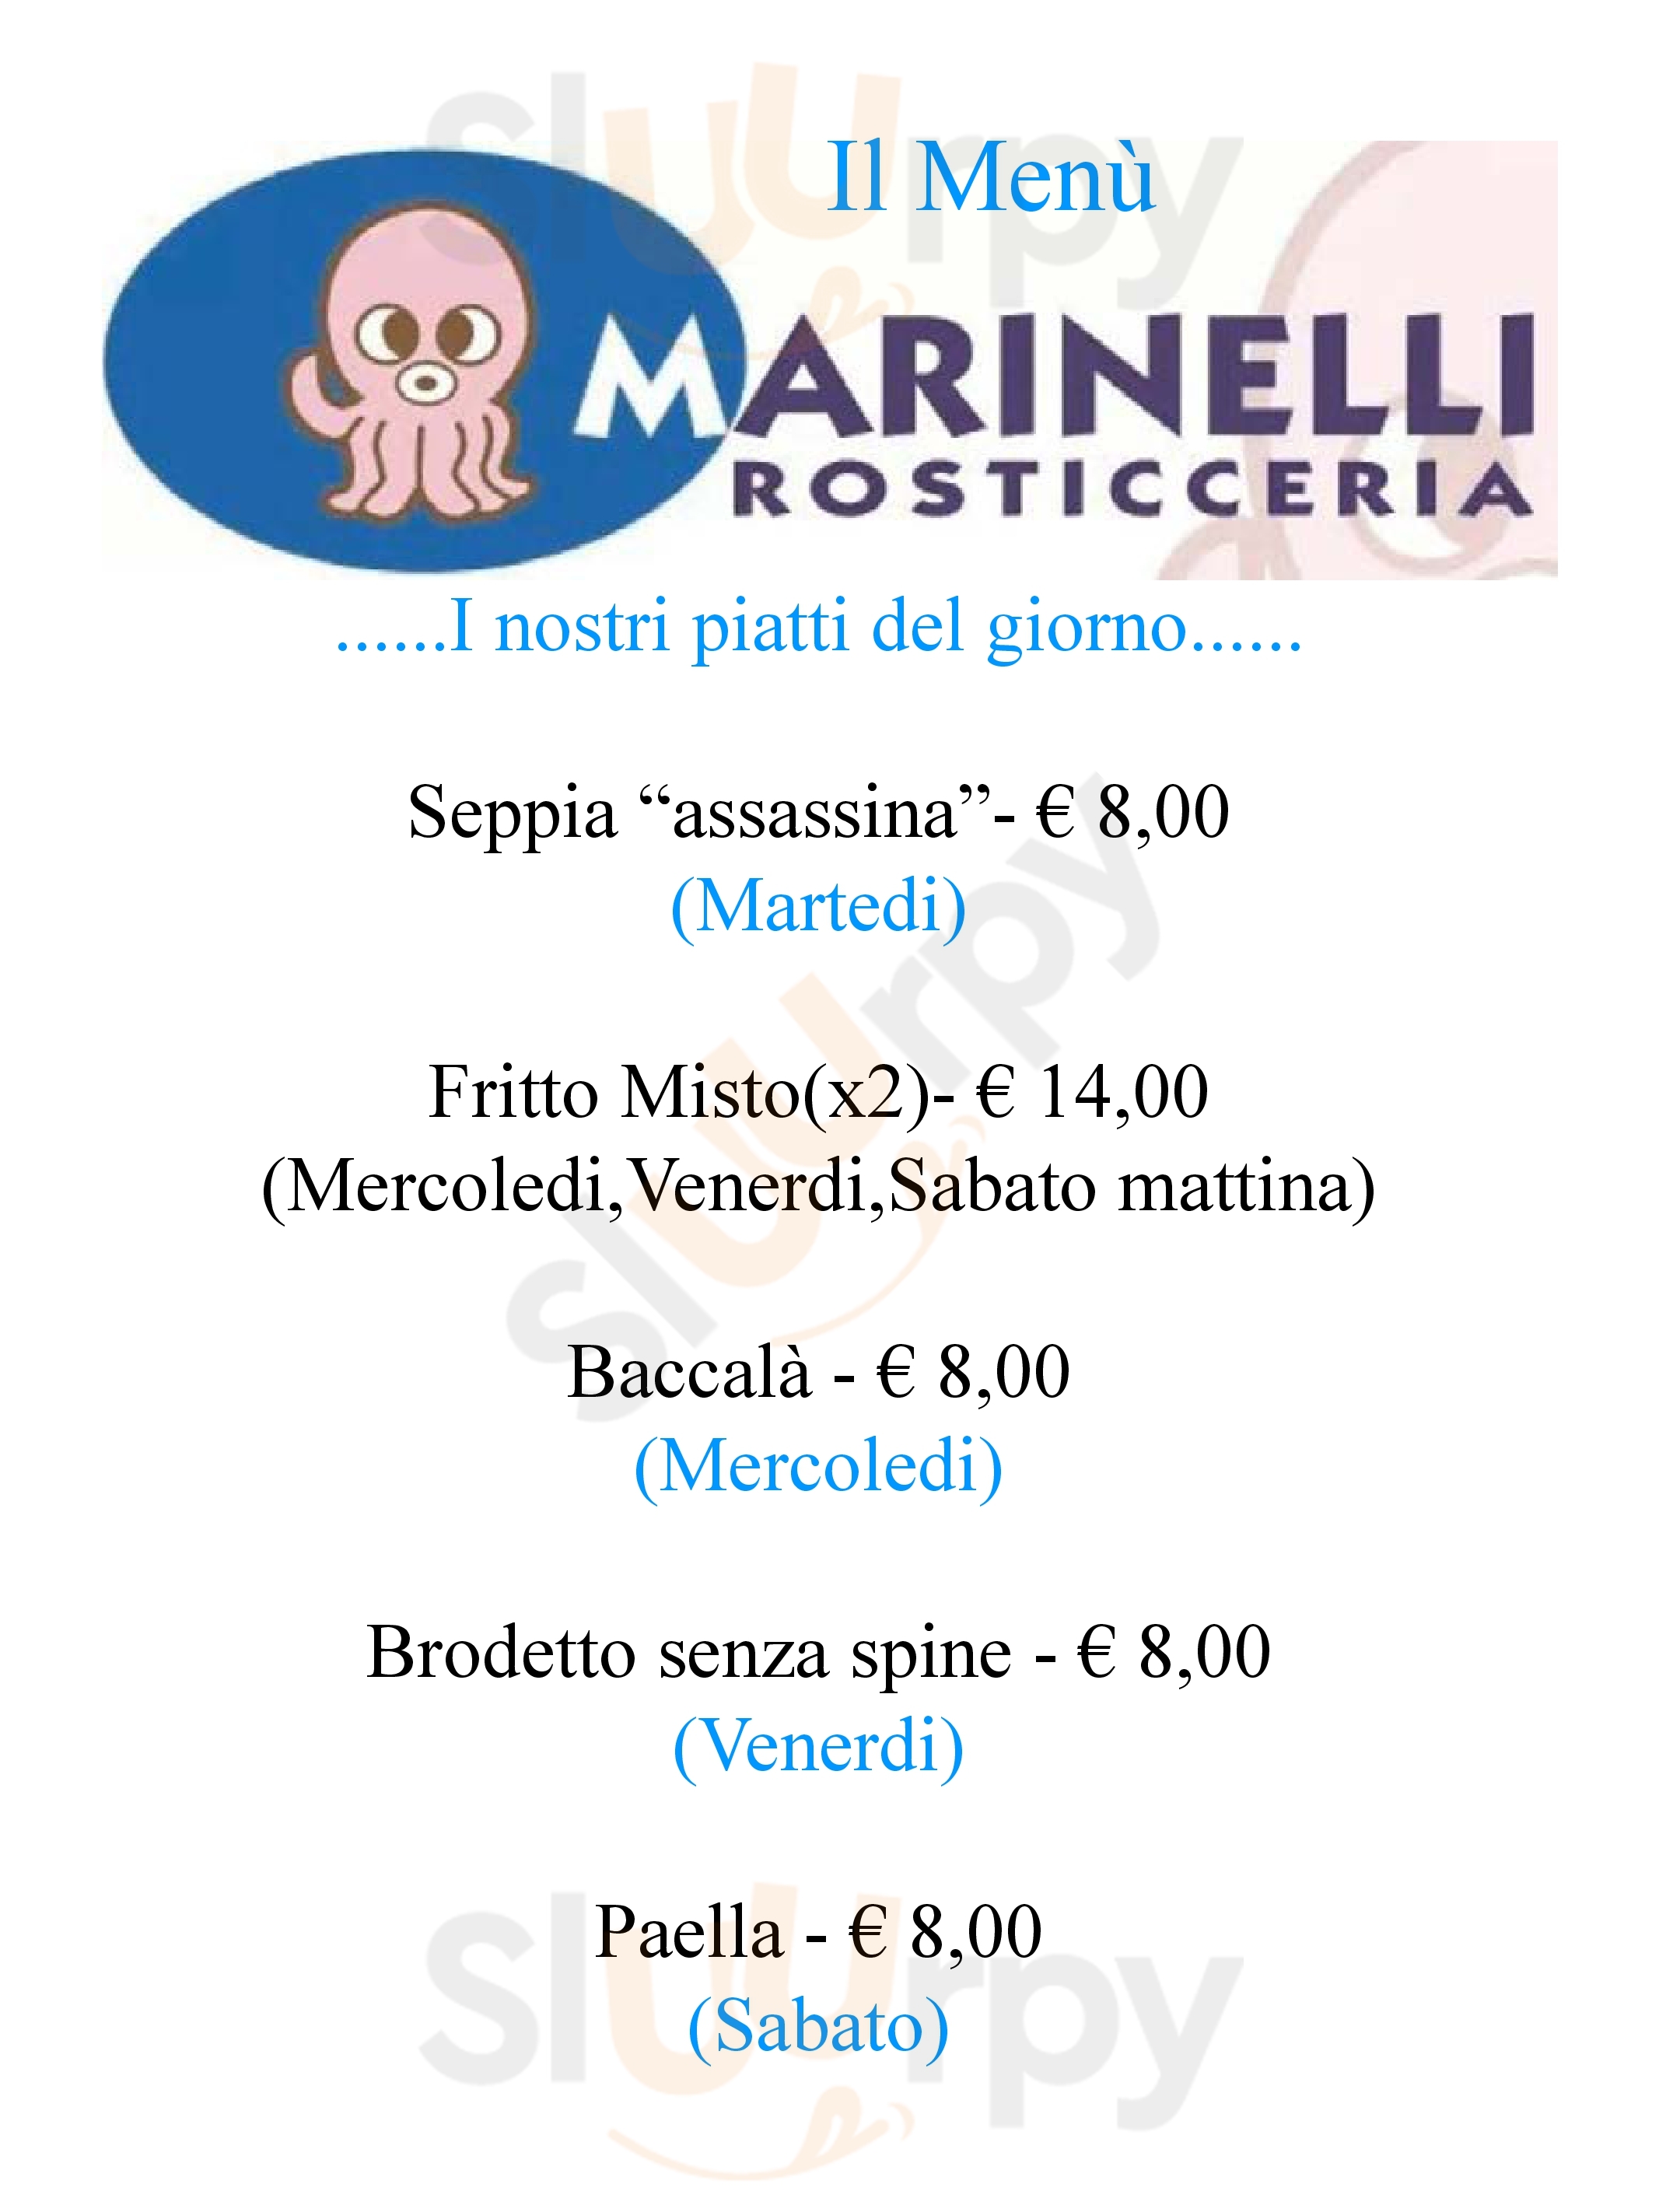 Rosticceria Marinelli Rimini menù 1 pagina